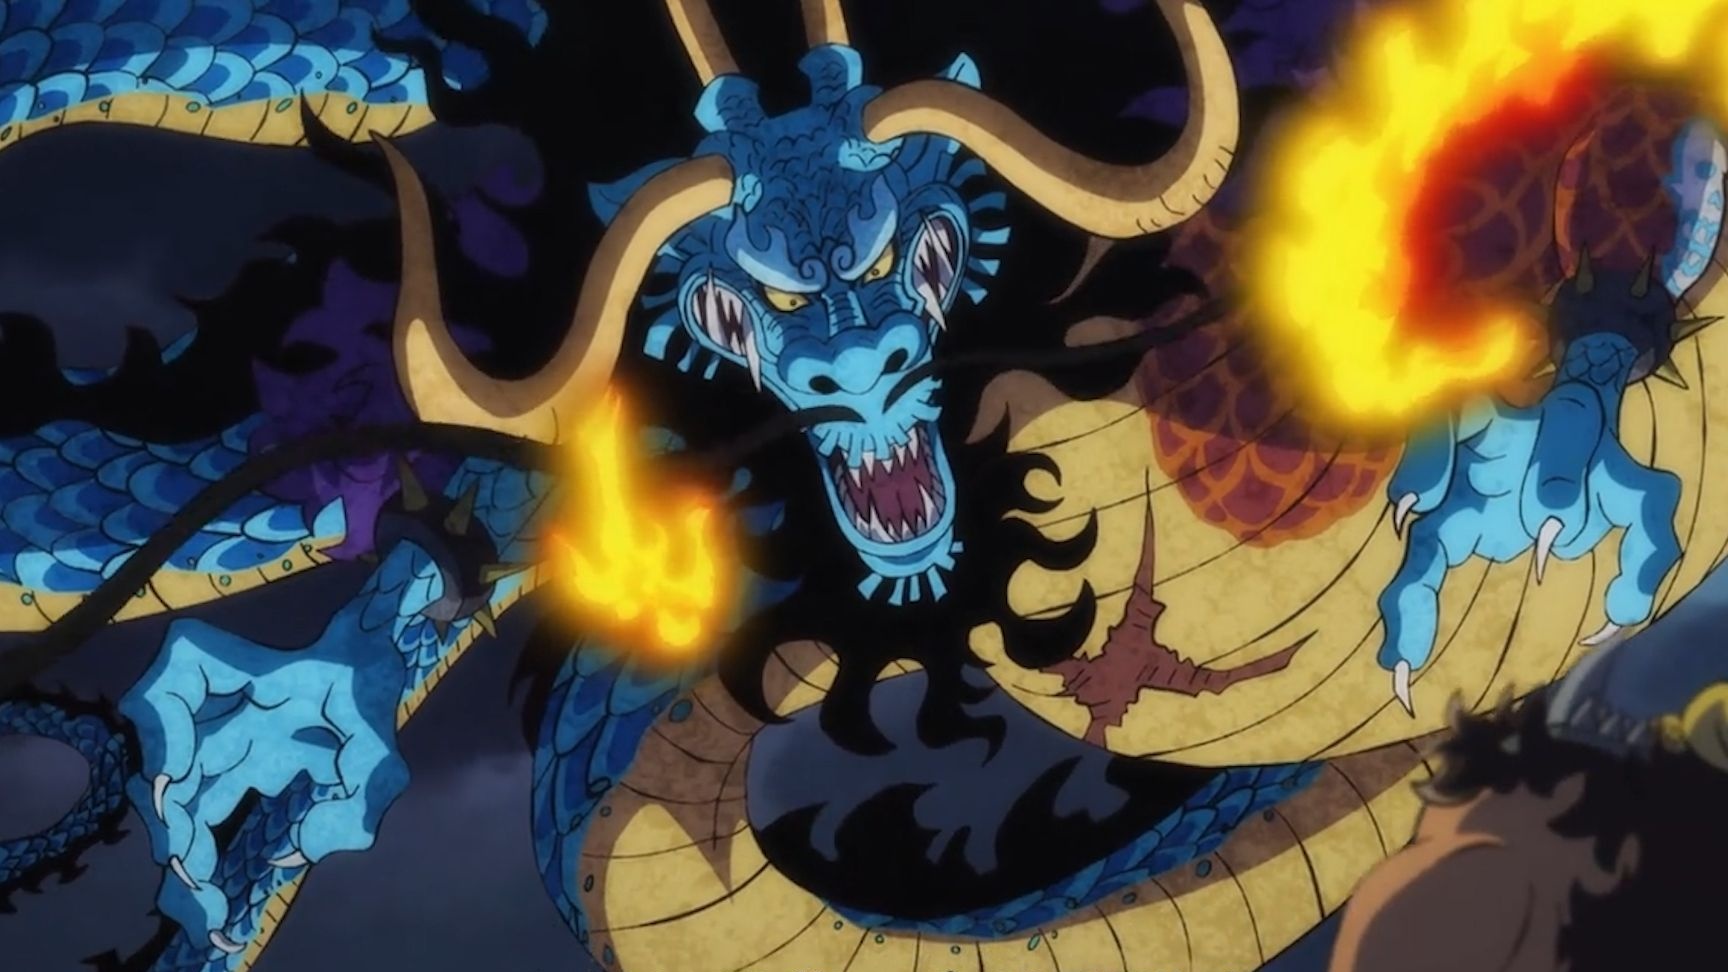 One Piece Episode 1022, Kaido Transformation, English Sub, Indu Sub, English, Onepiece 1022, By AnimeRaid